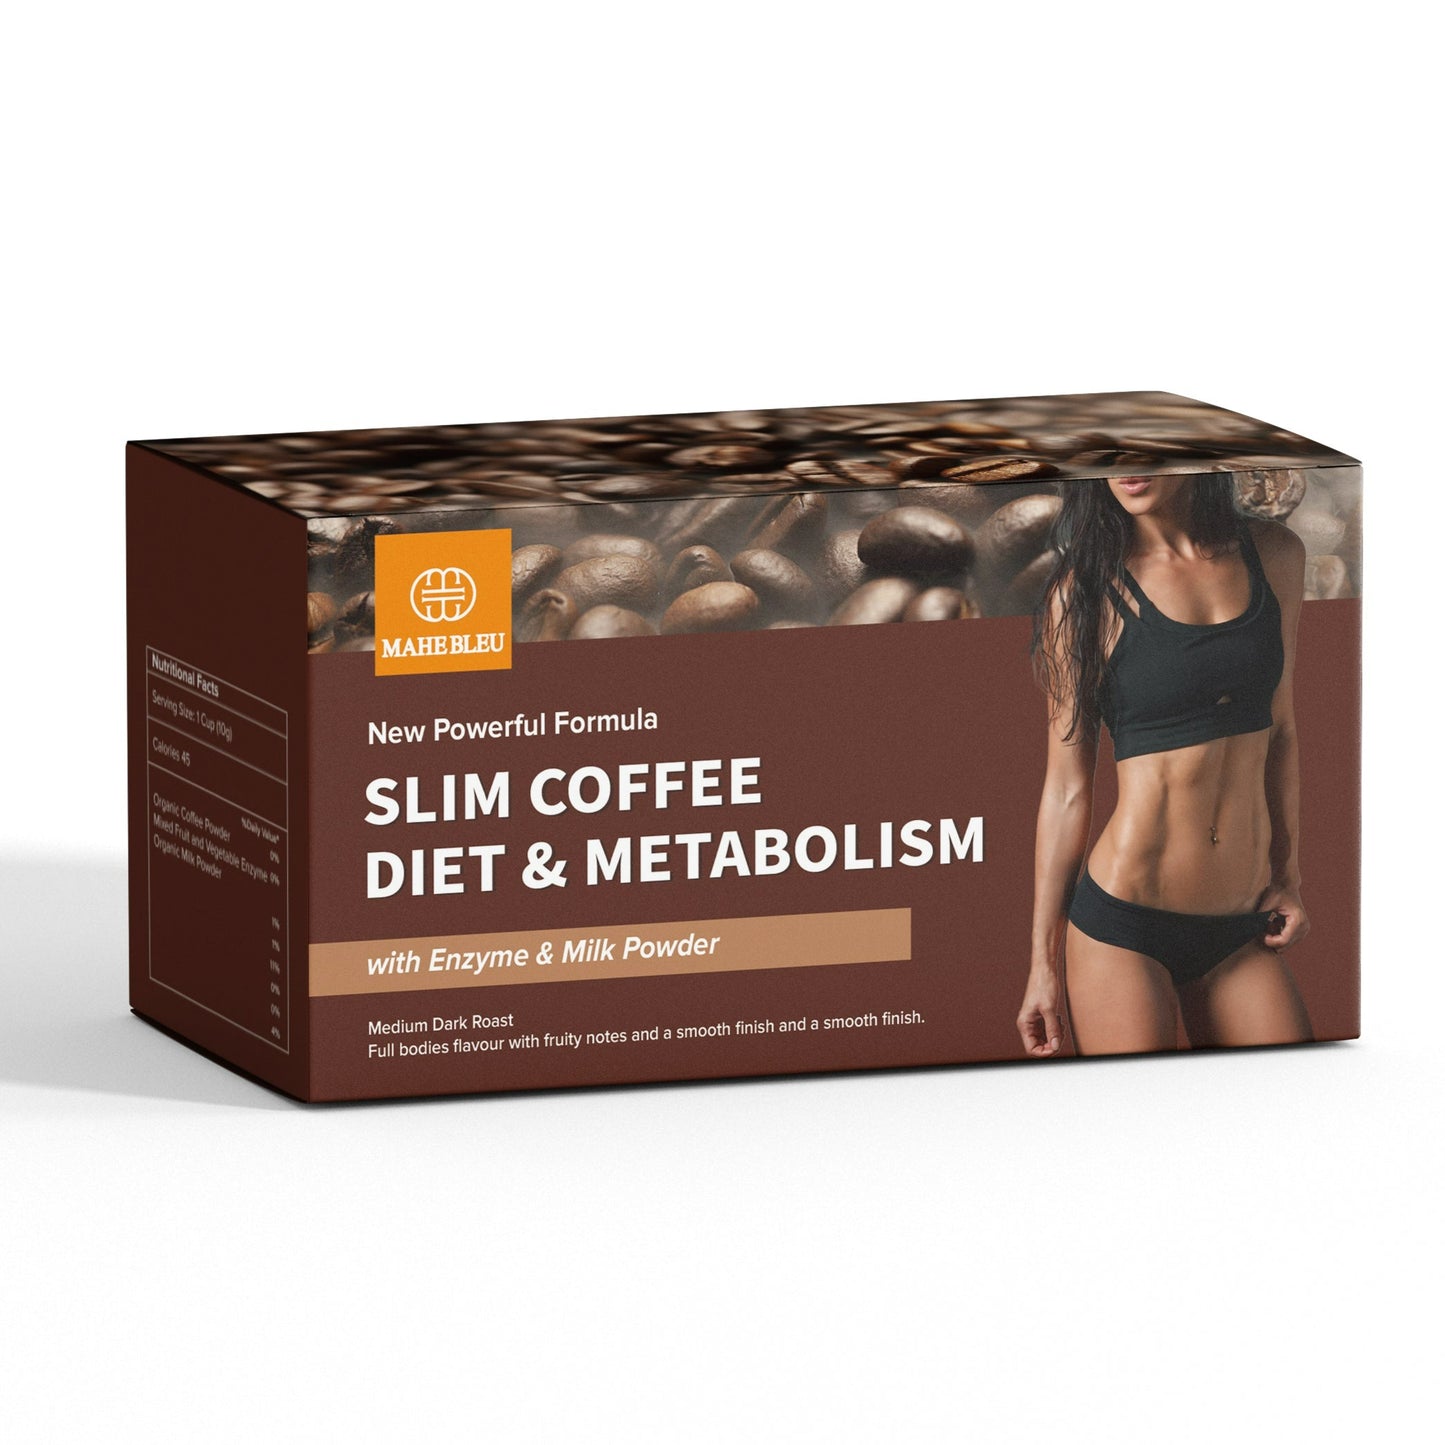 Slim Coffee - Diet & Metabolism with Enzyme & Milk Powder